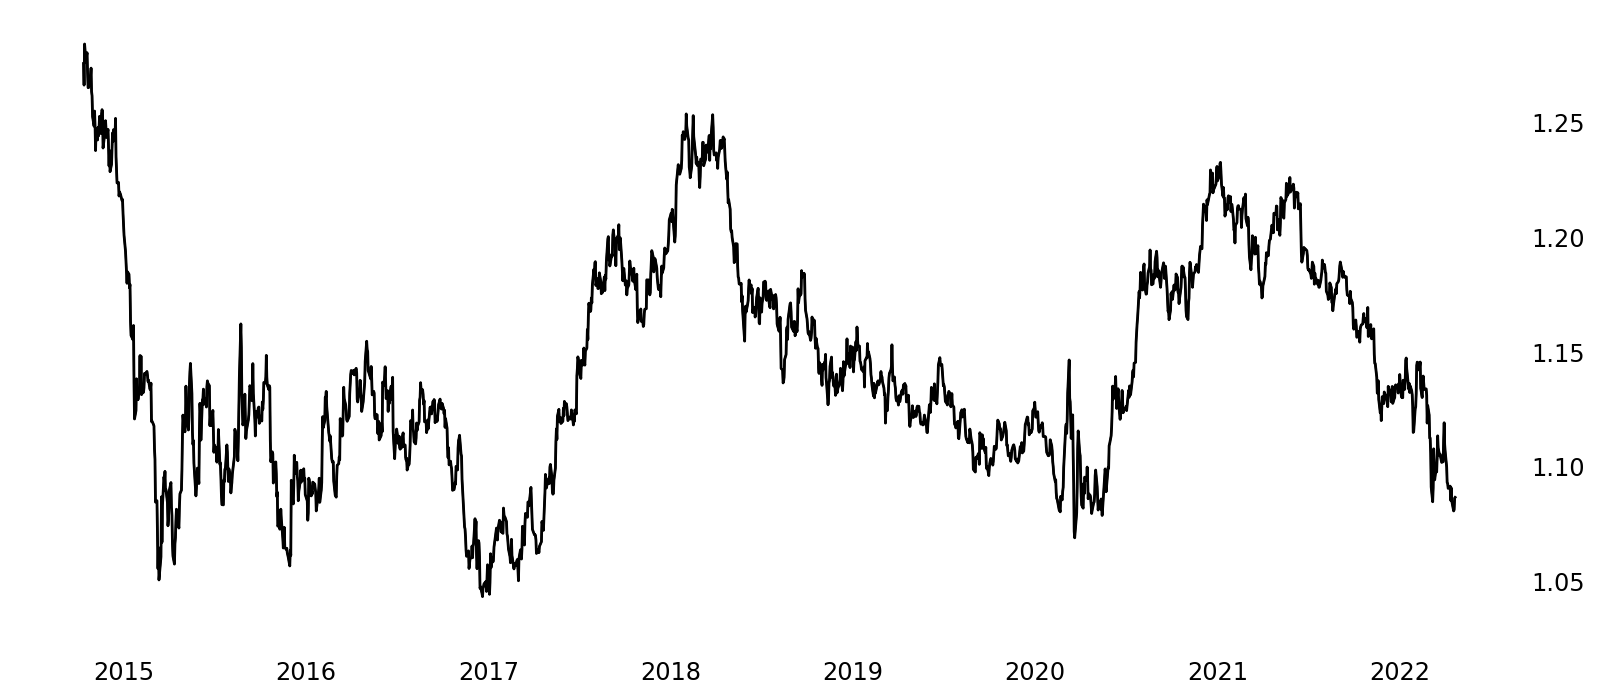 EUR/USD Exchange Rate History